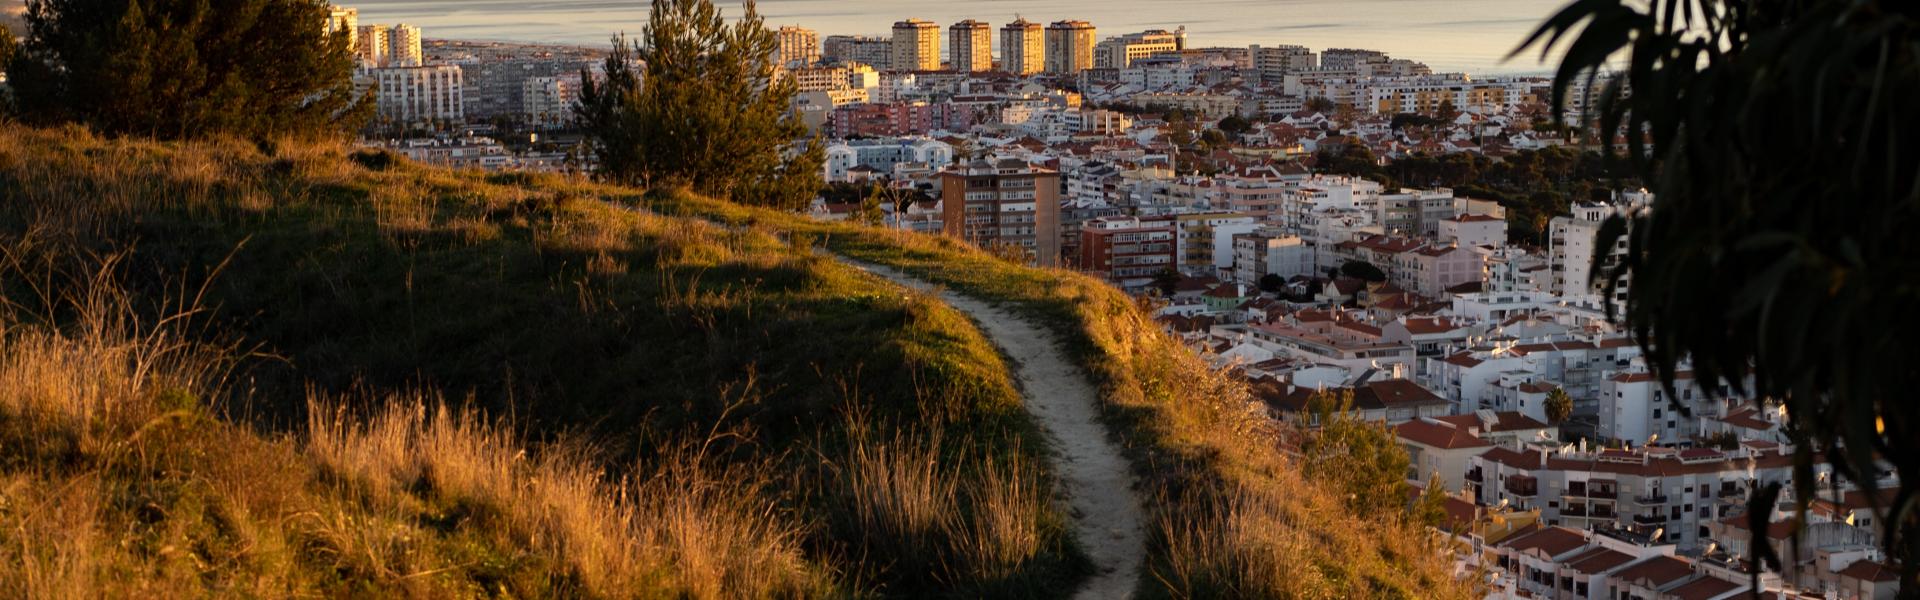 Noclegi i apartamenty wakacyjne na Costa di Lizbona - Casamundo